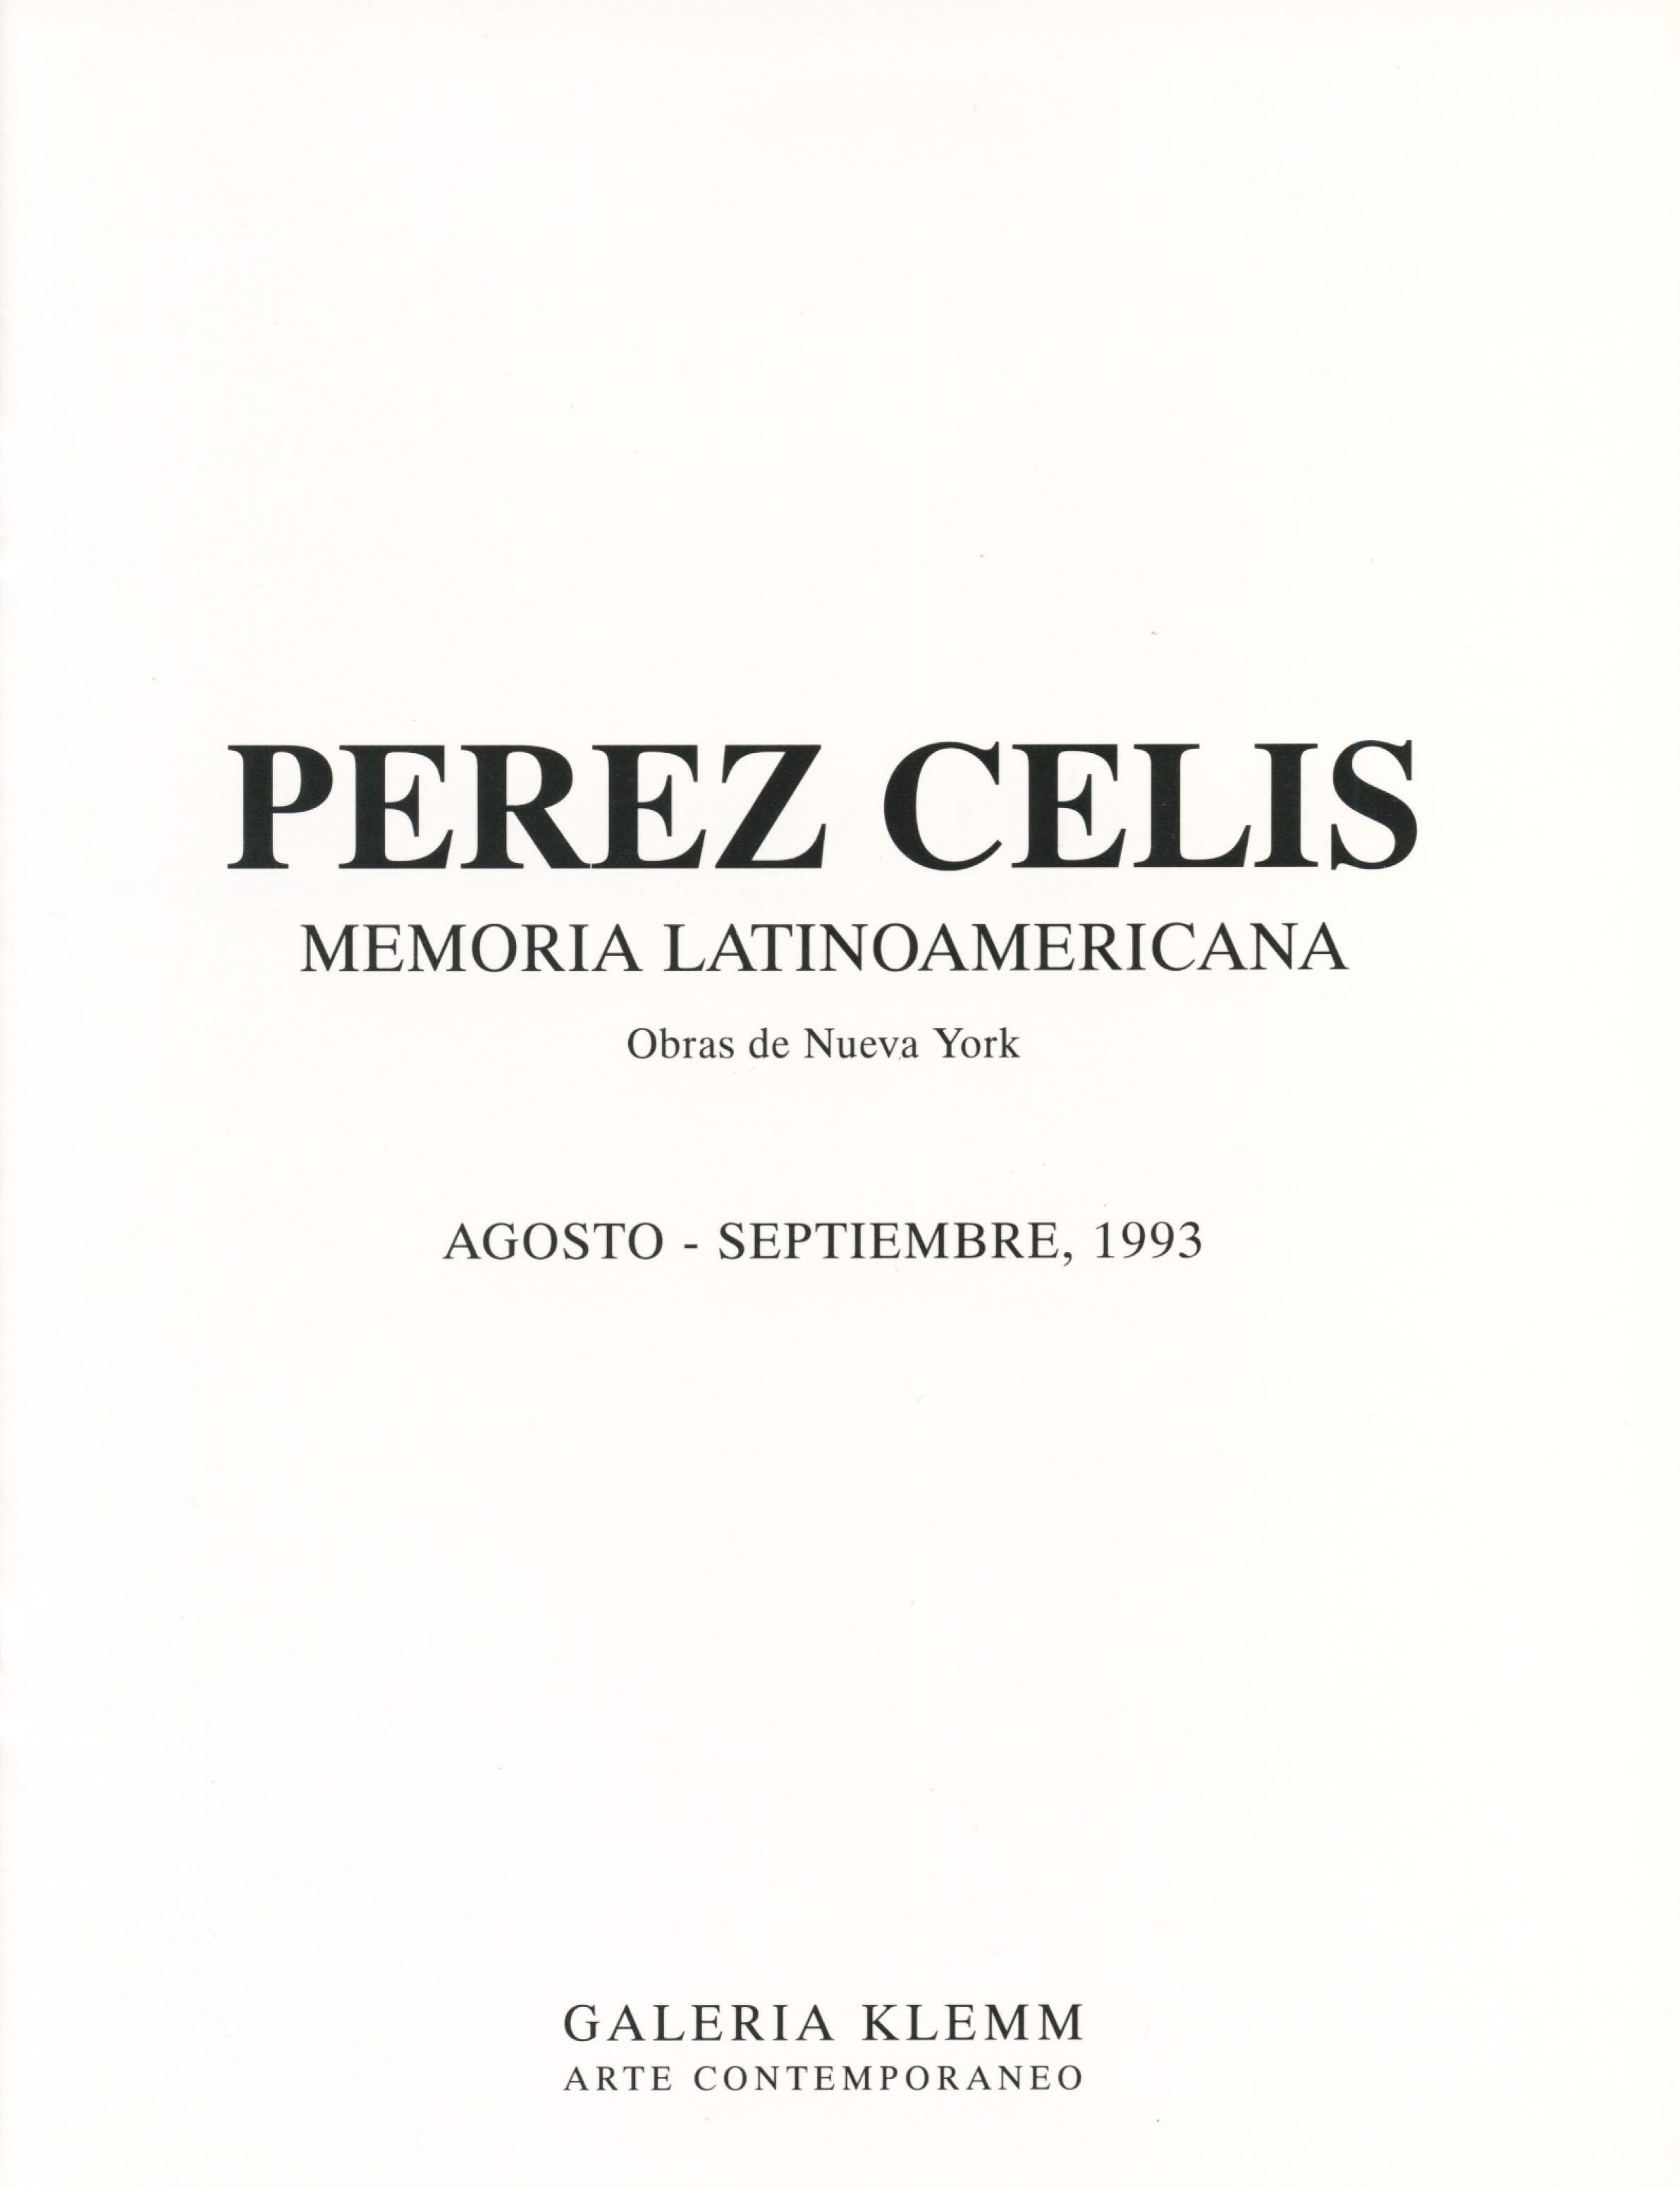 Pérez Celis. Memoria Latinoamericana (Obras de Nueva York)